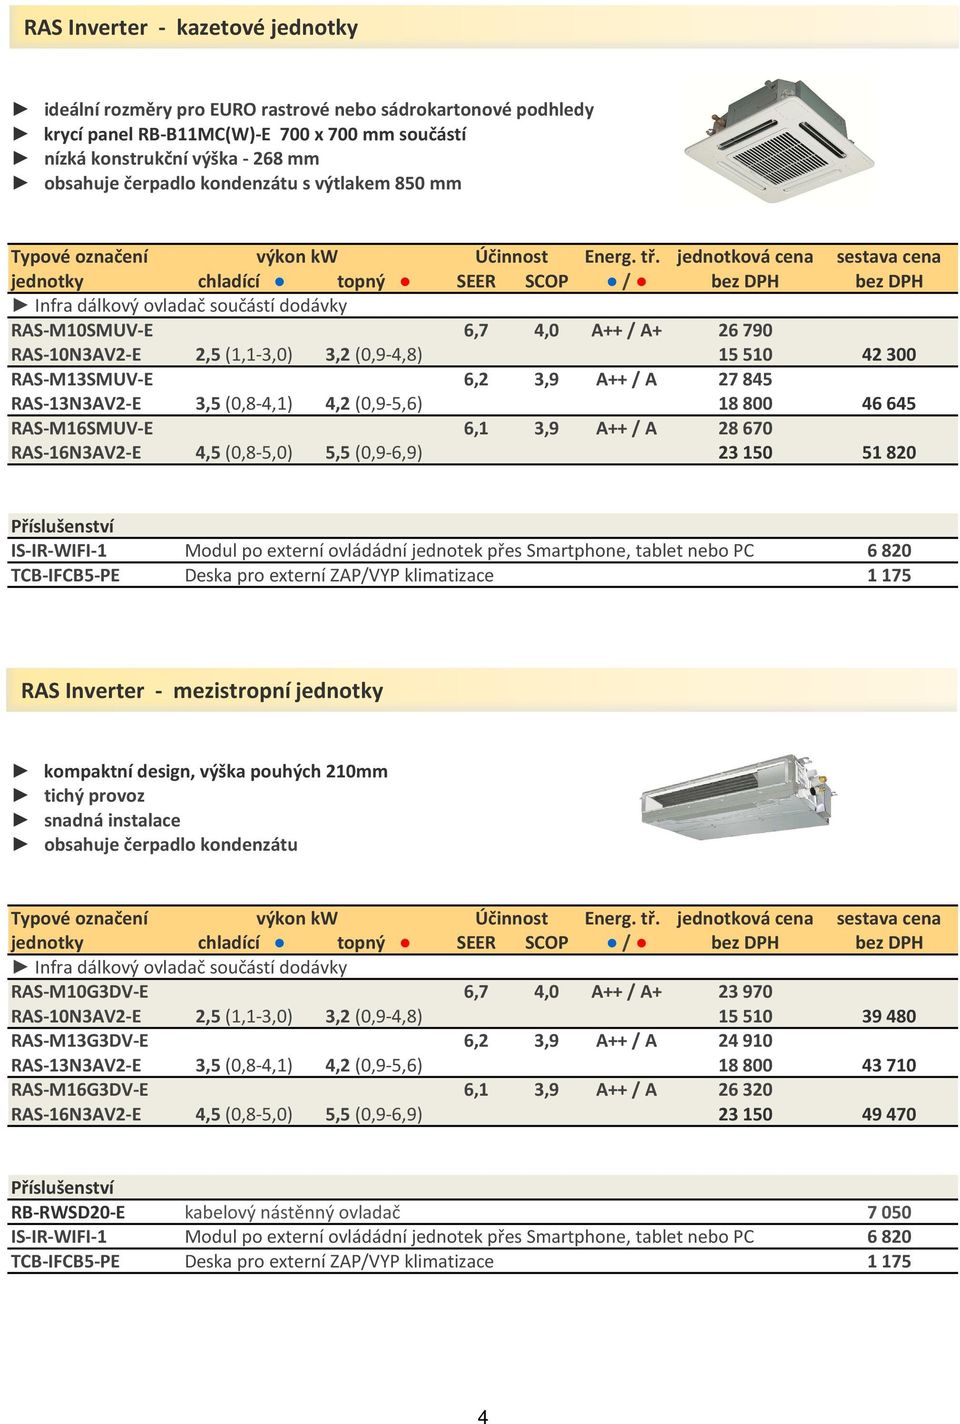 jednotková cena sestava cena jednotky chladící topný SEER SCOP / bez DPH bez DPH Infra dálkový ovladač součástí dodávky RAS-M10SMUV-E 6,7 4,0 A++ / A+ 26790 RAS-10N3AV2-E 2,5 (1,1-3,0) 3,2 (0,9-4,8)